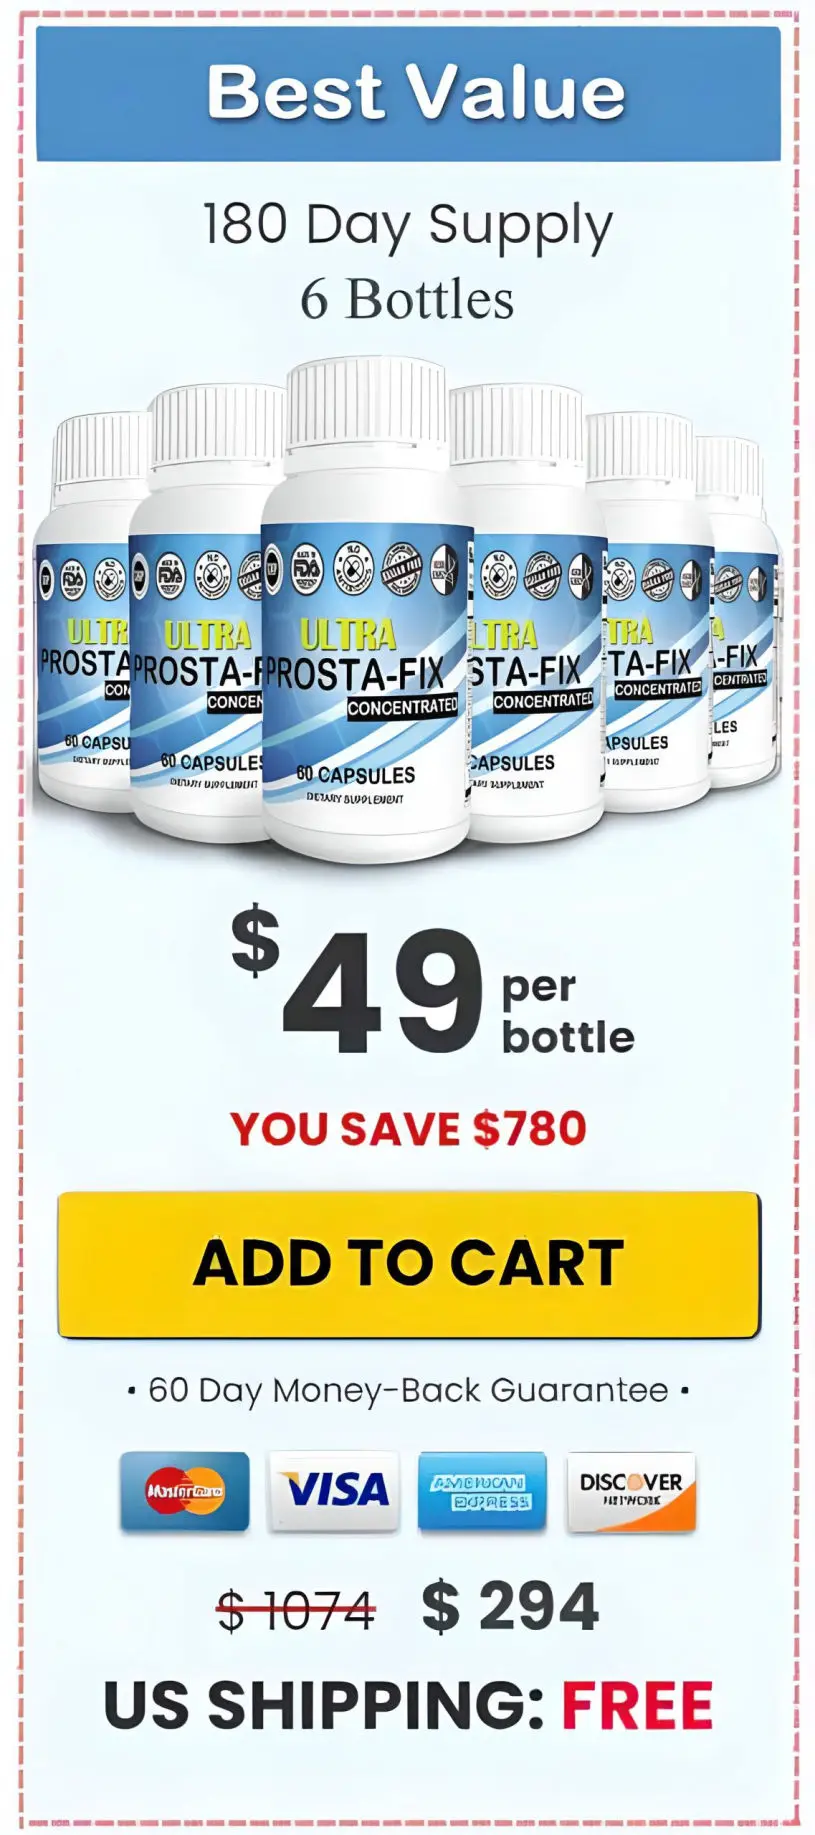 ultraprostafix-6-bottles-price-$49/bottle Only!